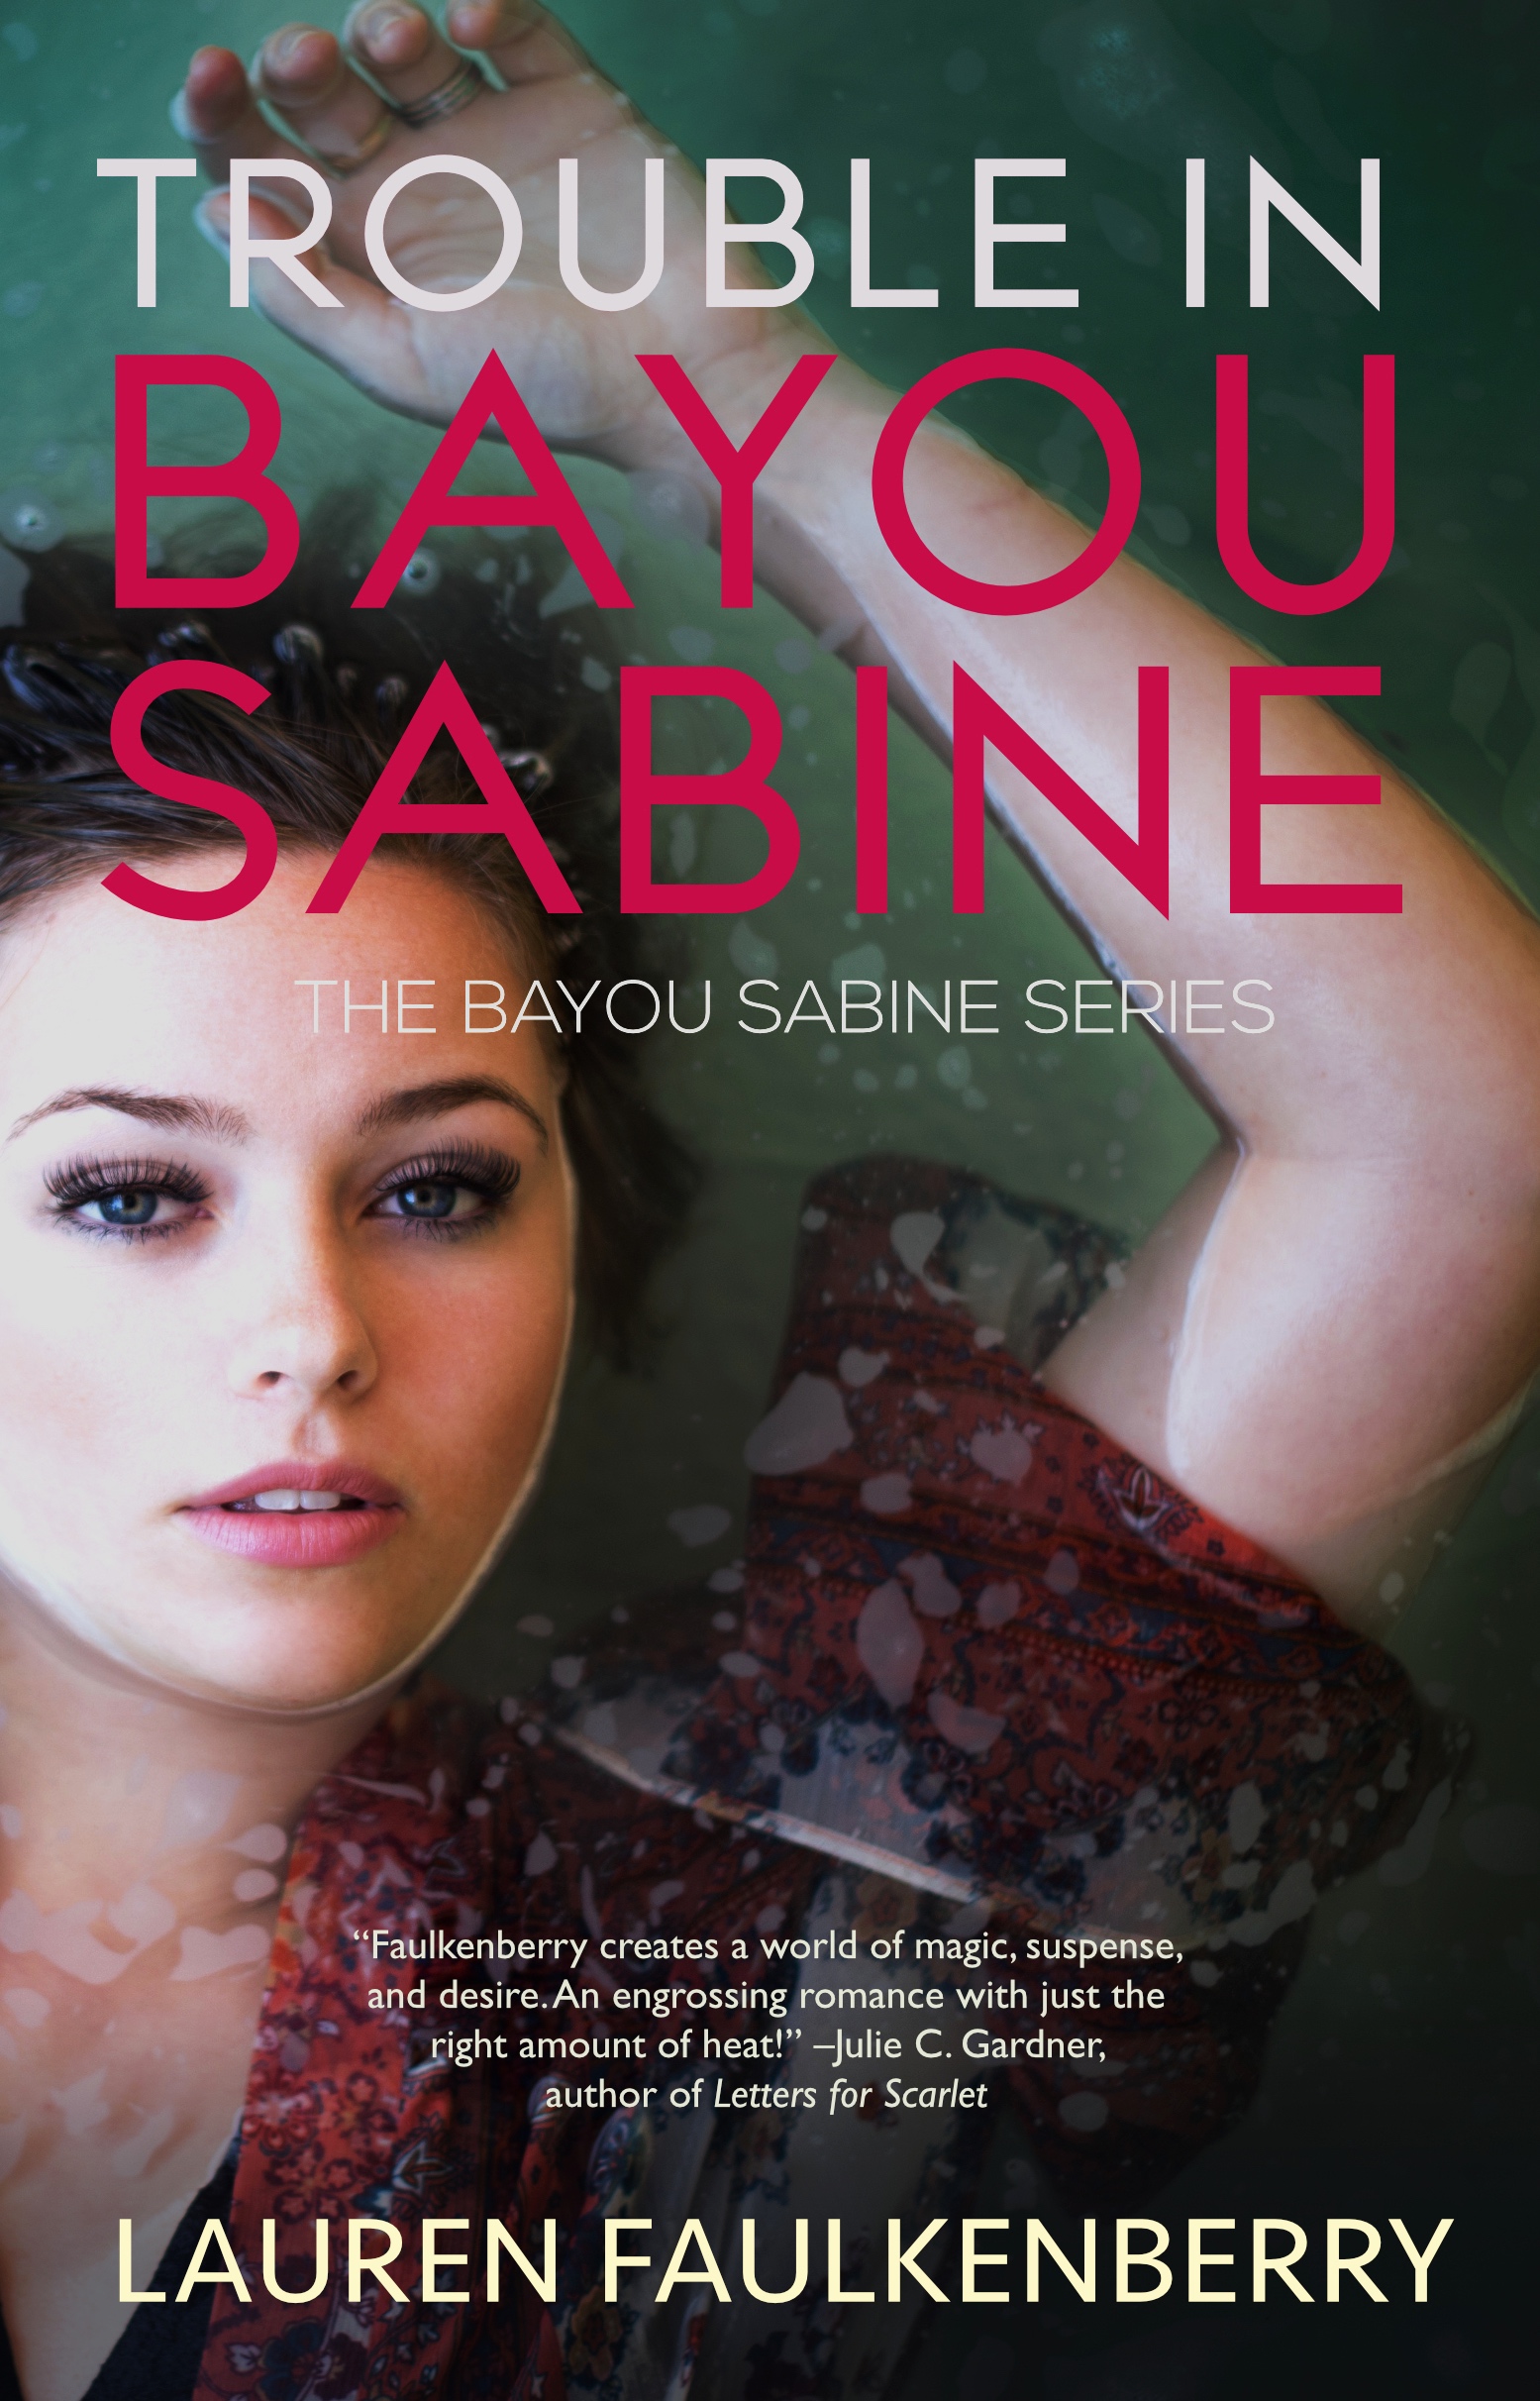 FREE: TROUBLE IN BAYOU SABINE by Lauren Faulkenberry